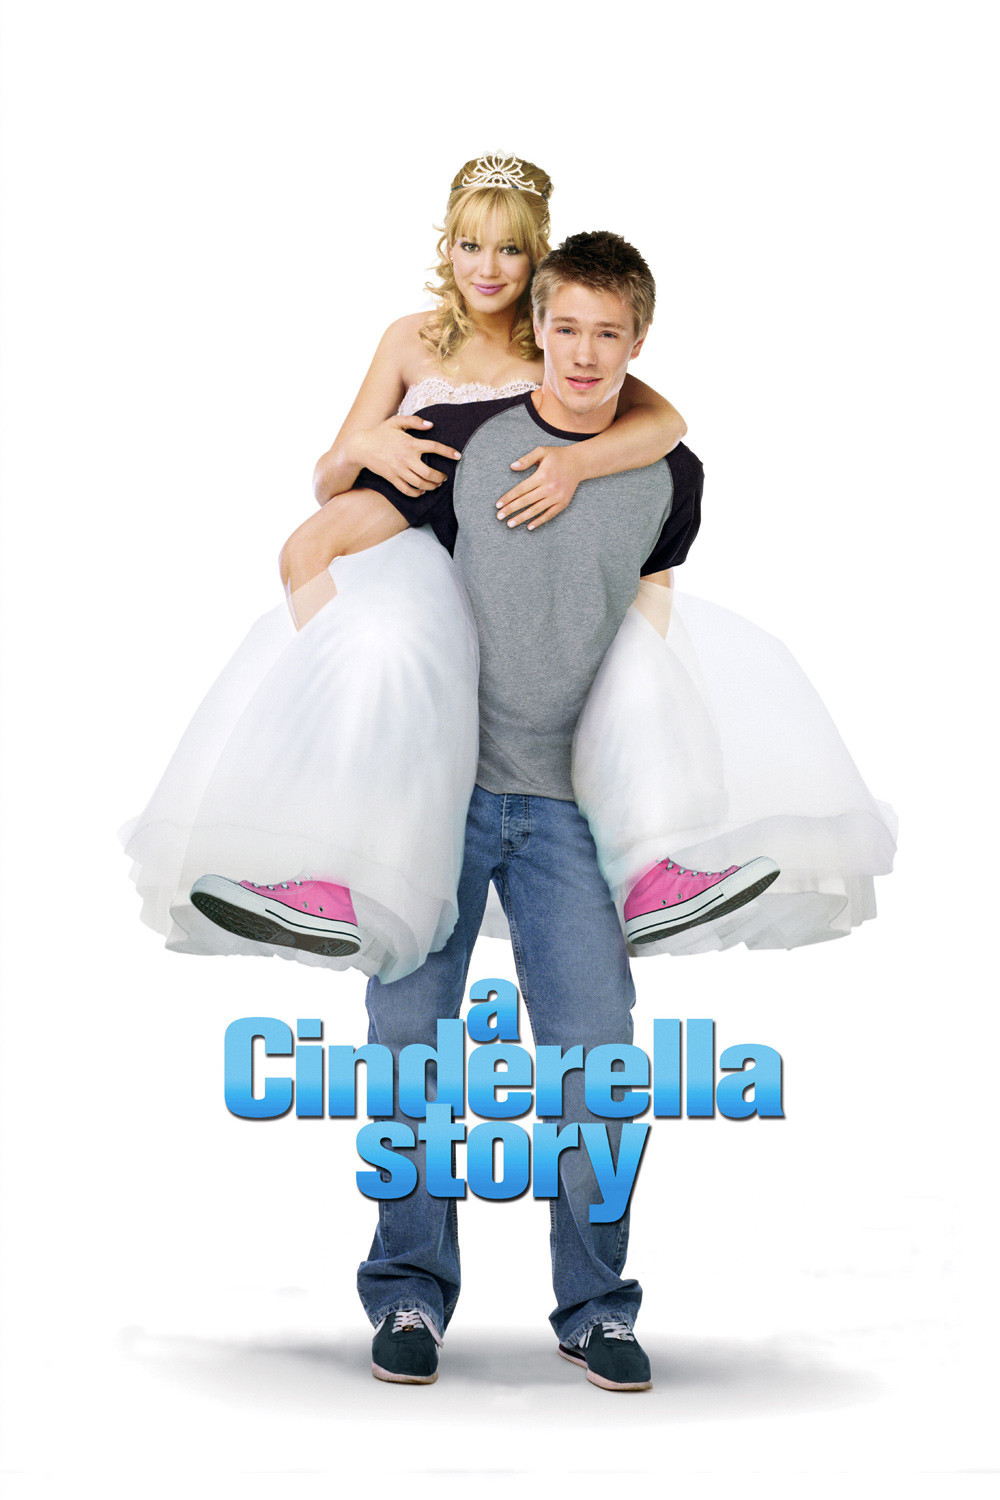 The original story of cinderella